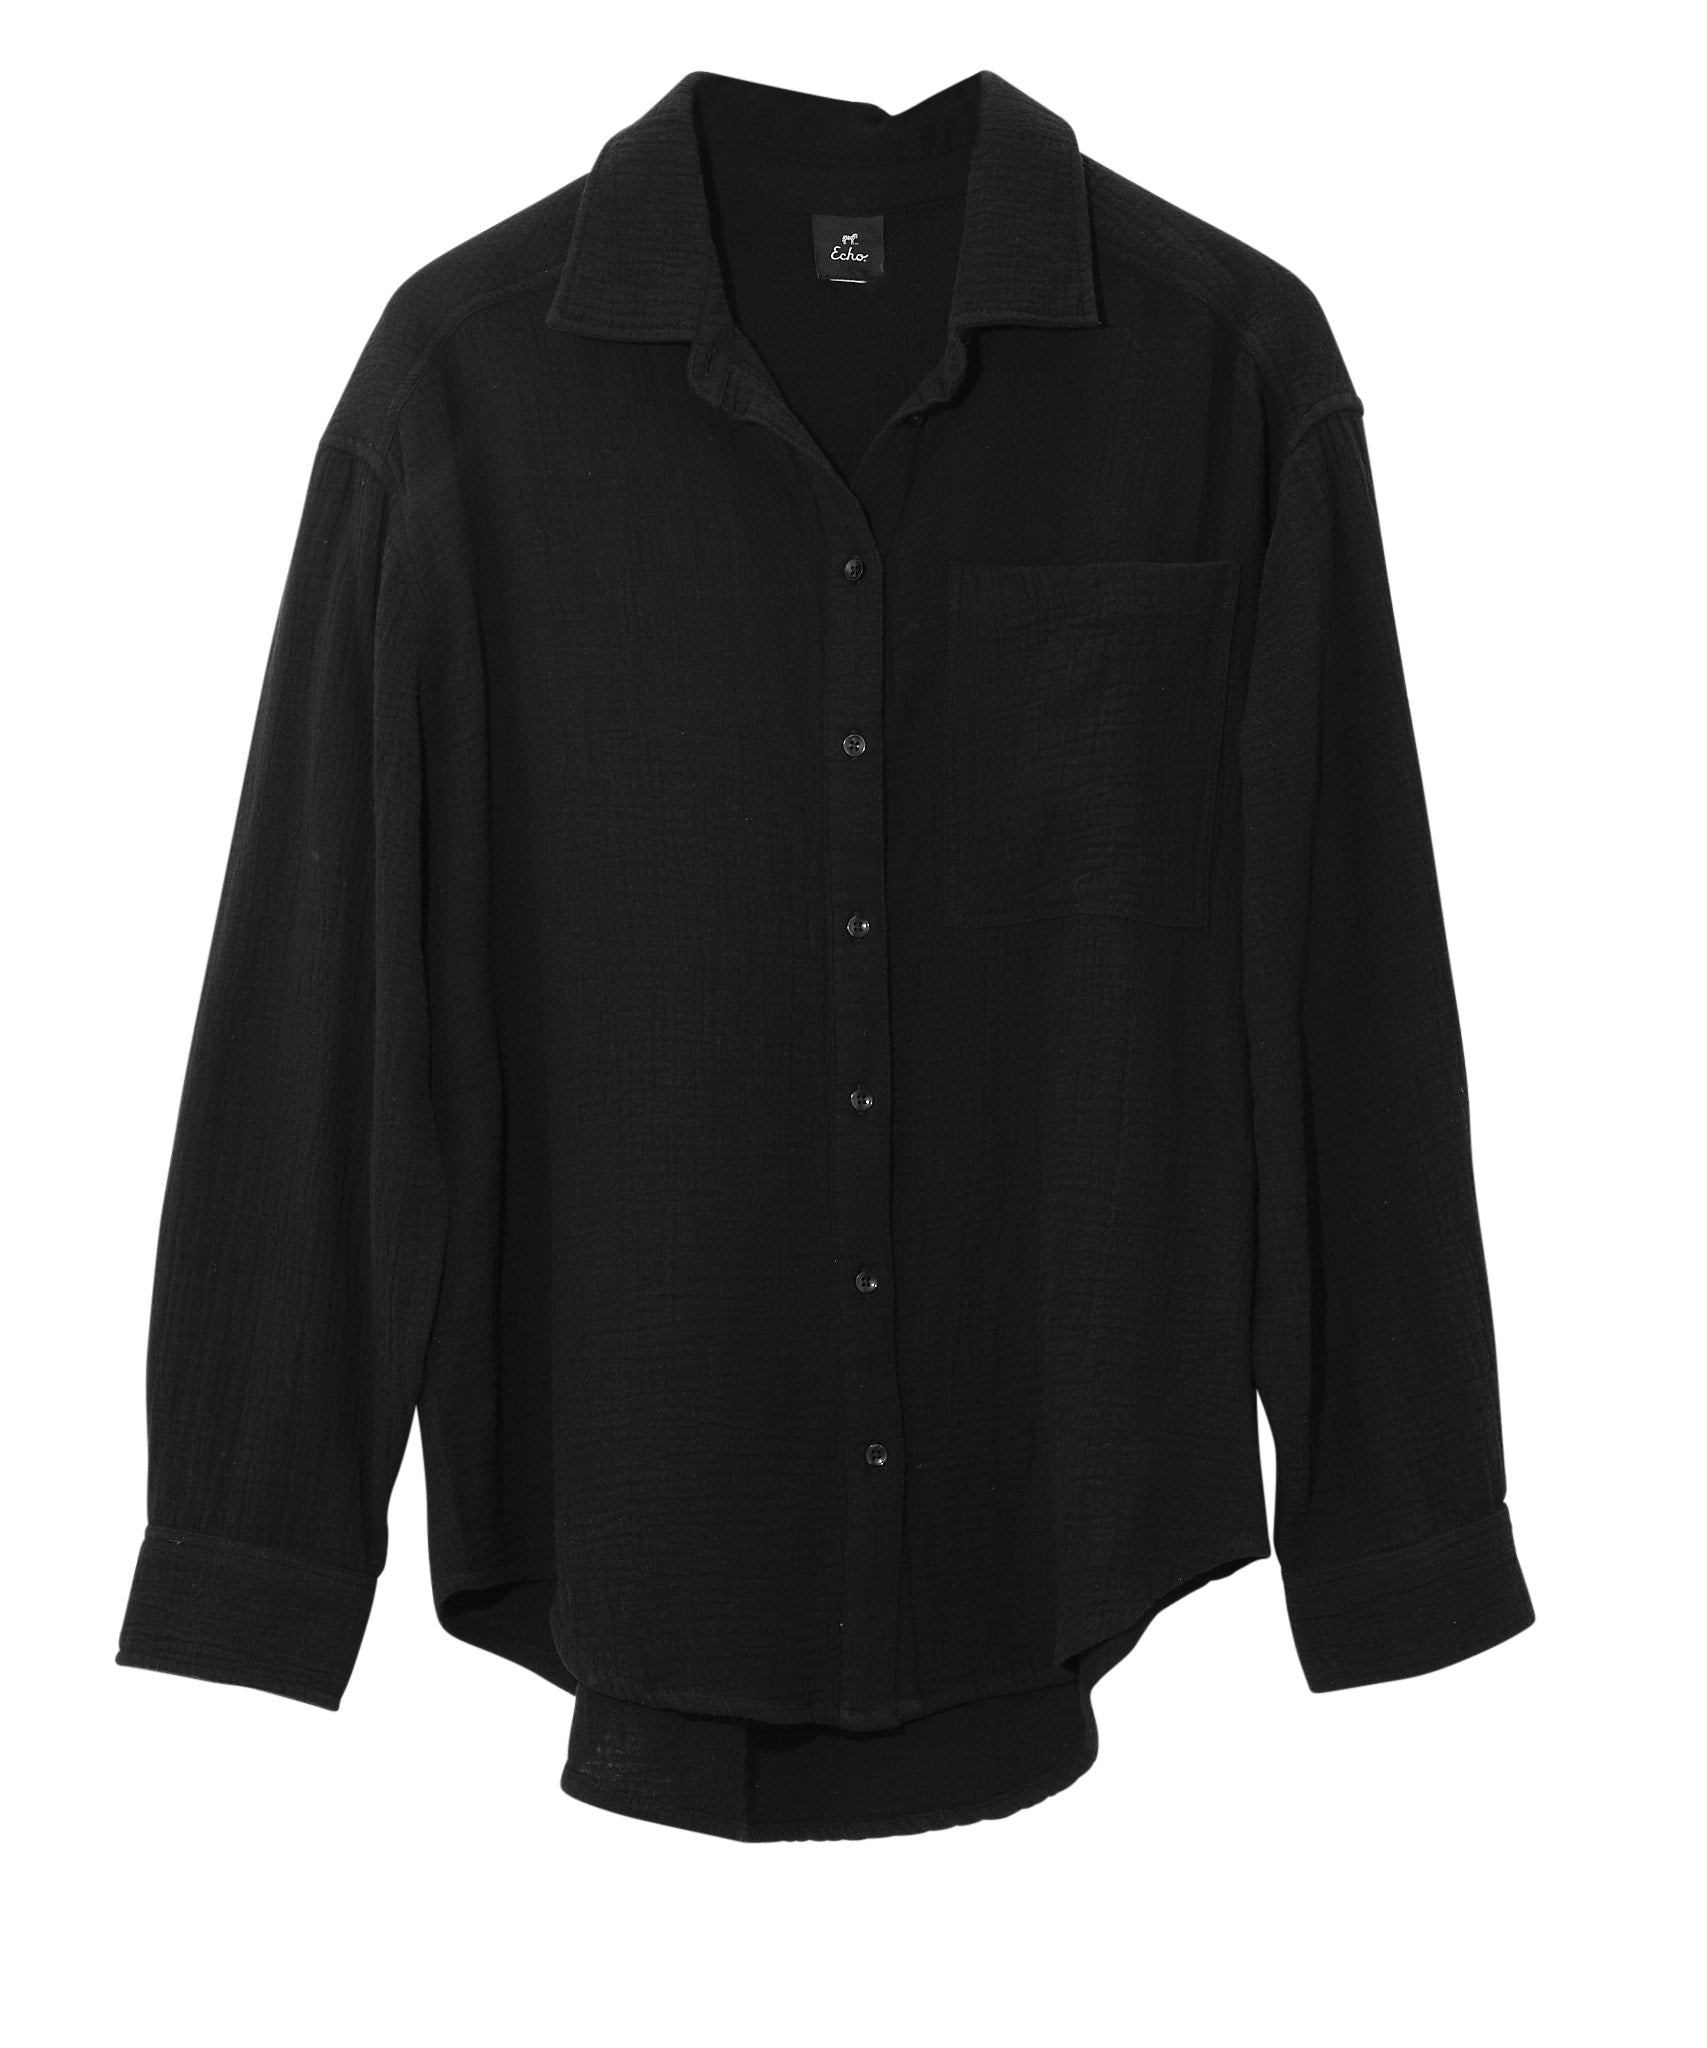 Supersoft Gauze Boyfriend Shirt in color black.